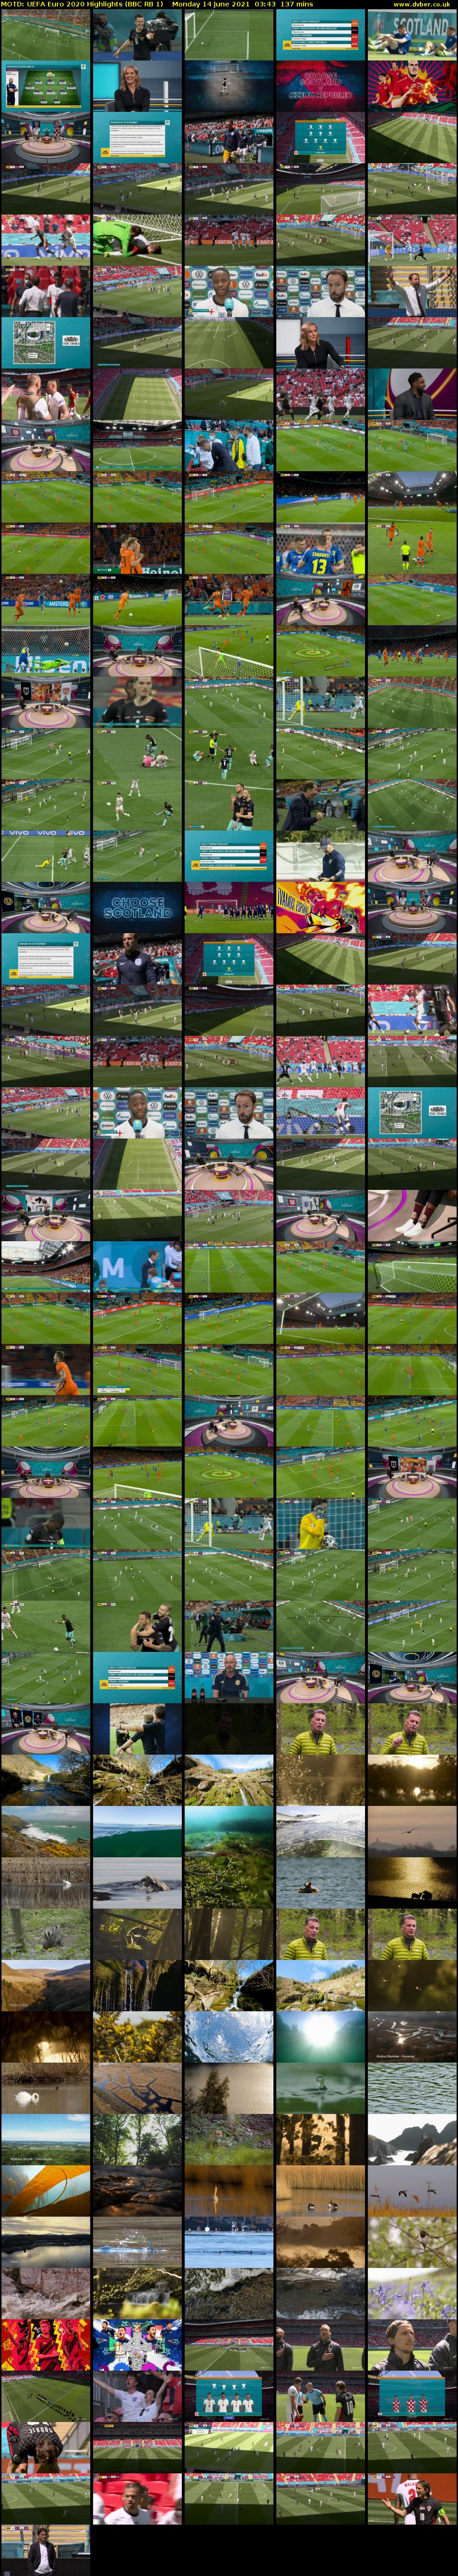 MOTD: UEFA Euro 2020 Highlights (BBC RB 1) Monday 14 June 2021 03:43 - 06:00